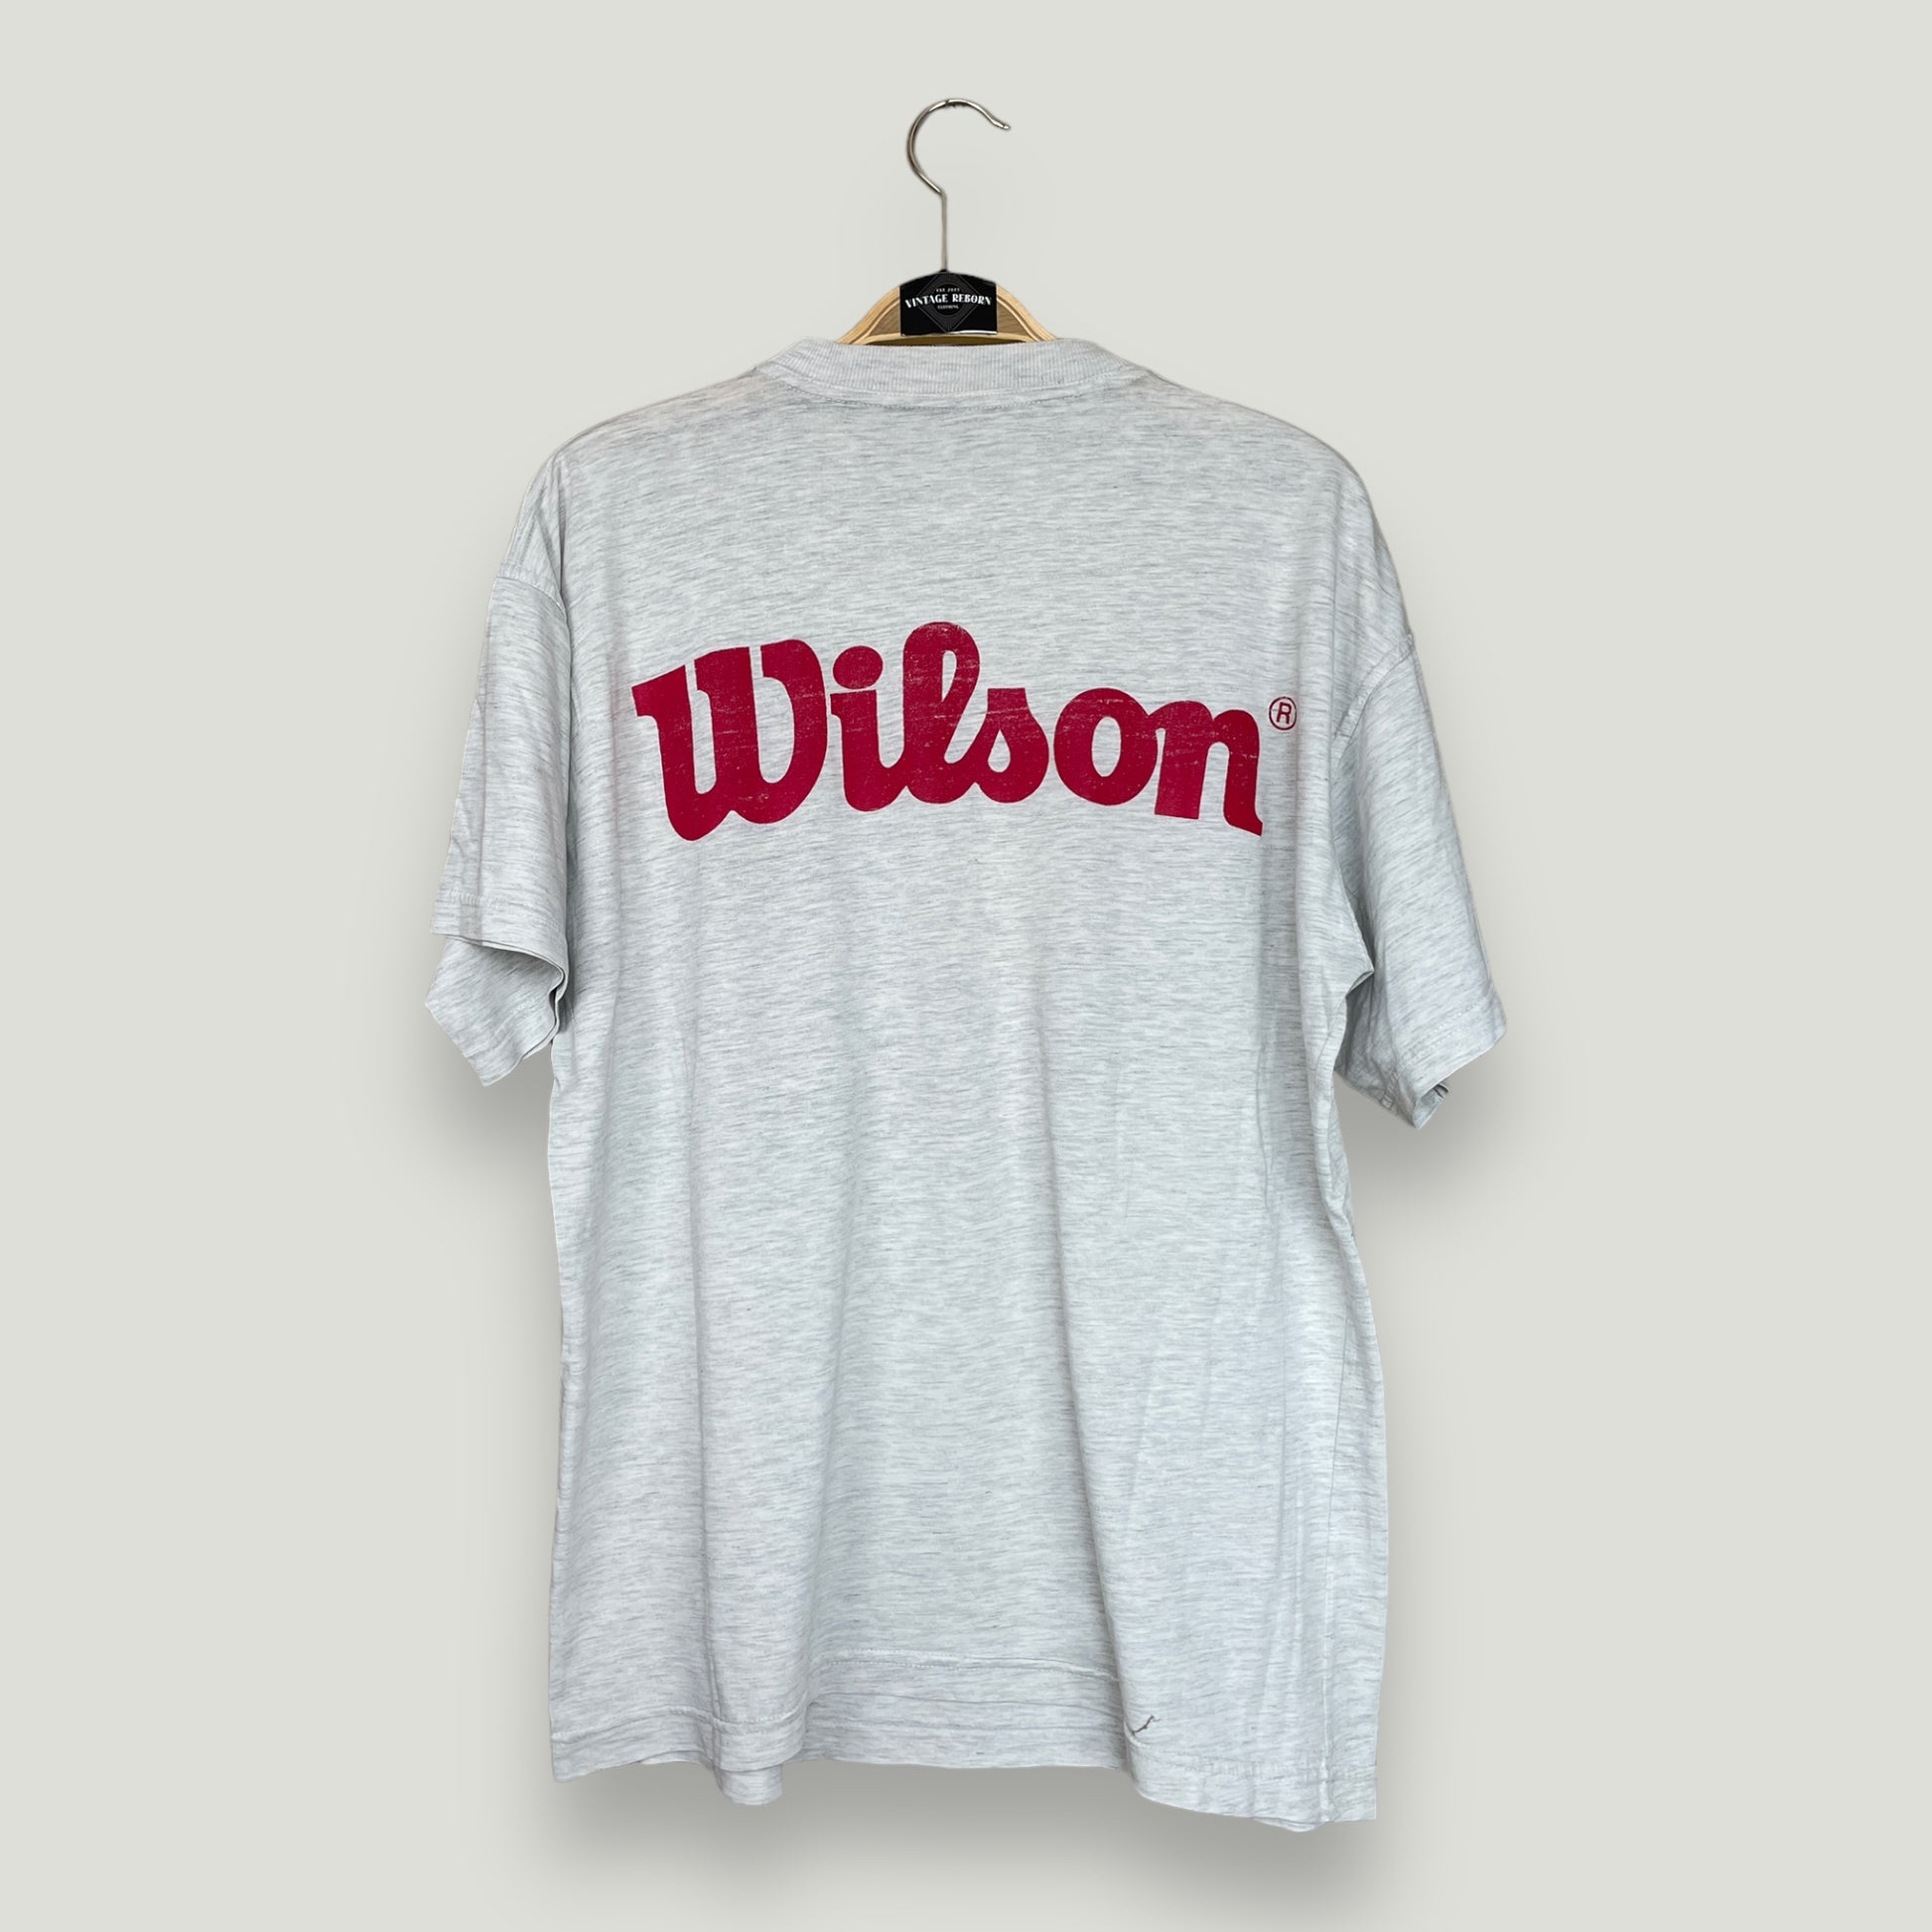 Wilson Vintage Tshirt - Vintage Reborn